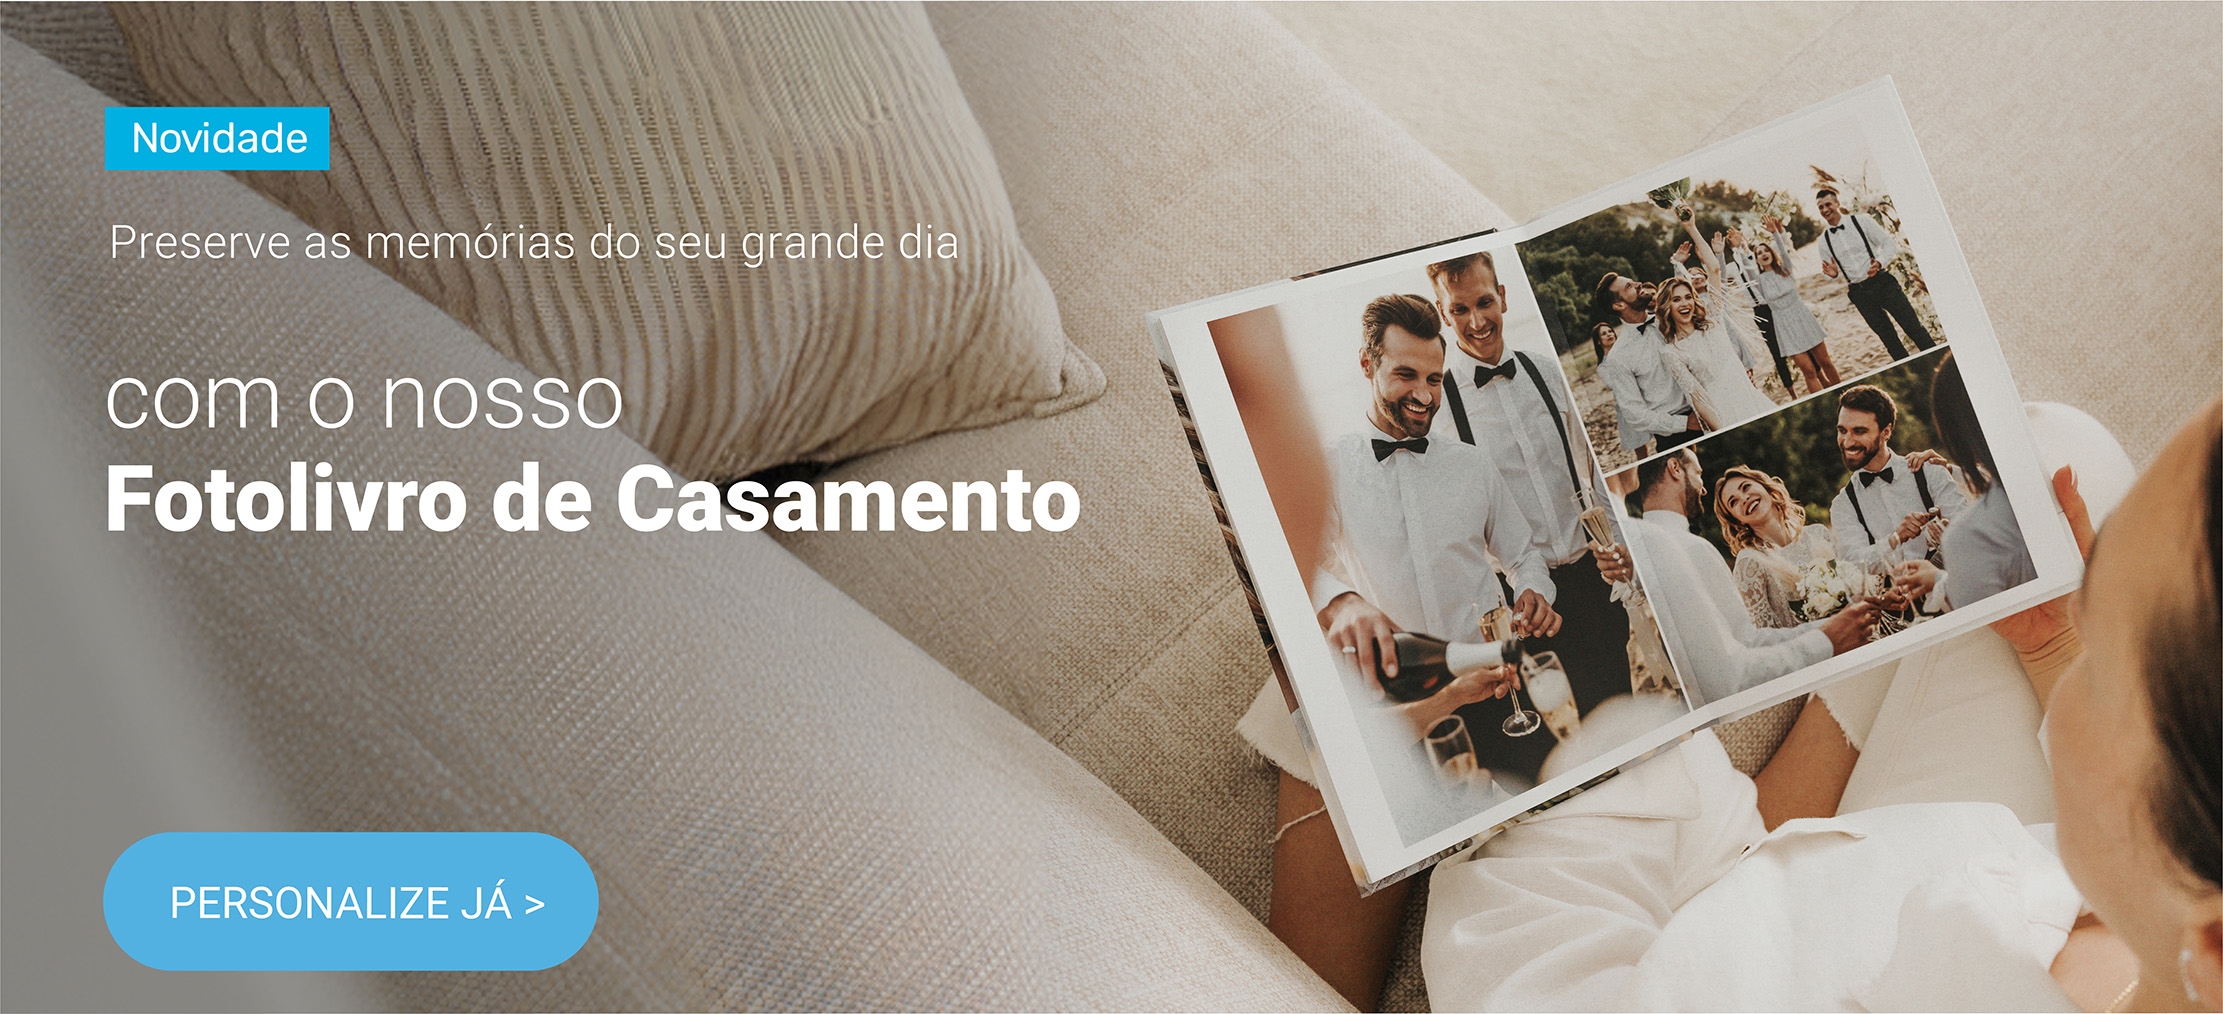 Fotolivro Casamento_desktop